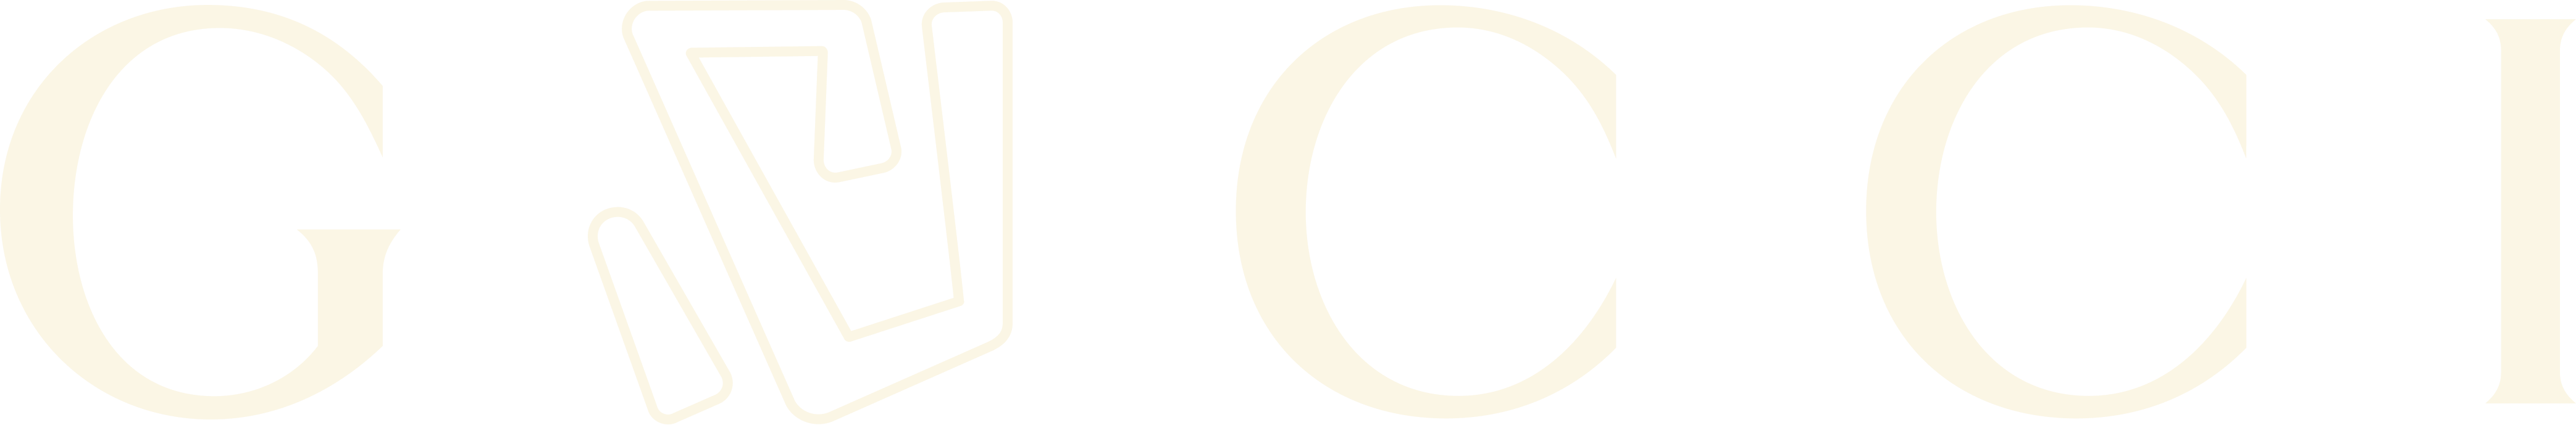 OS Gucci logo_1